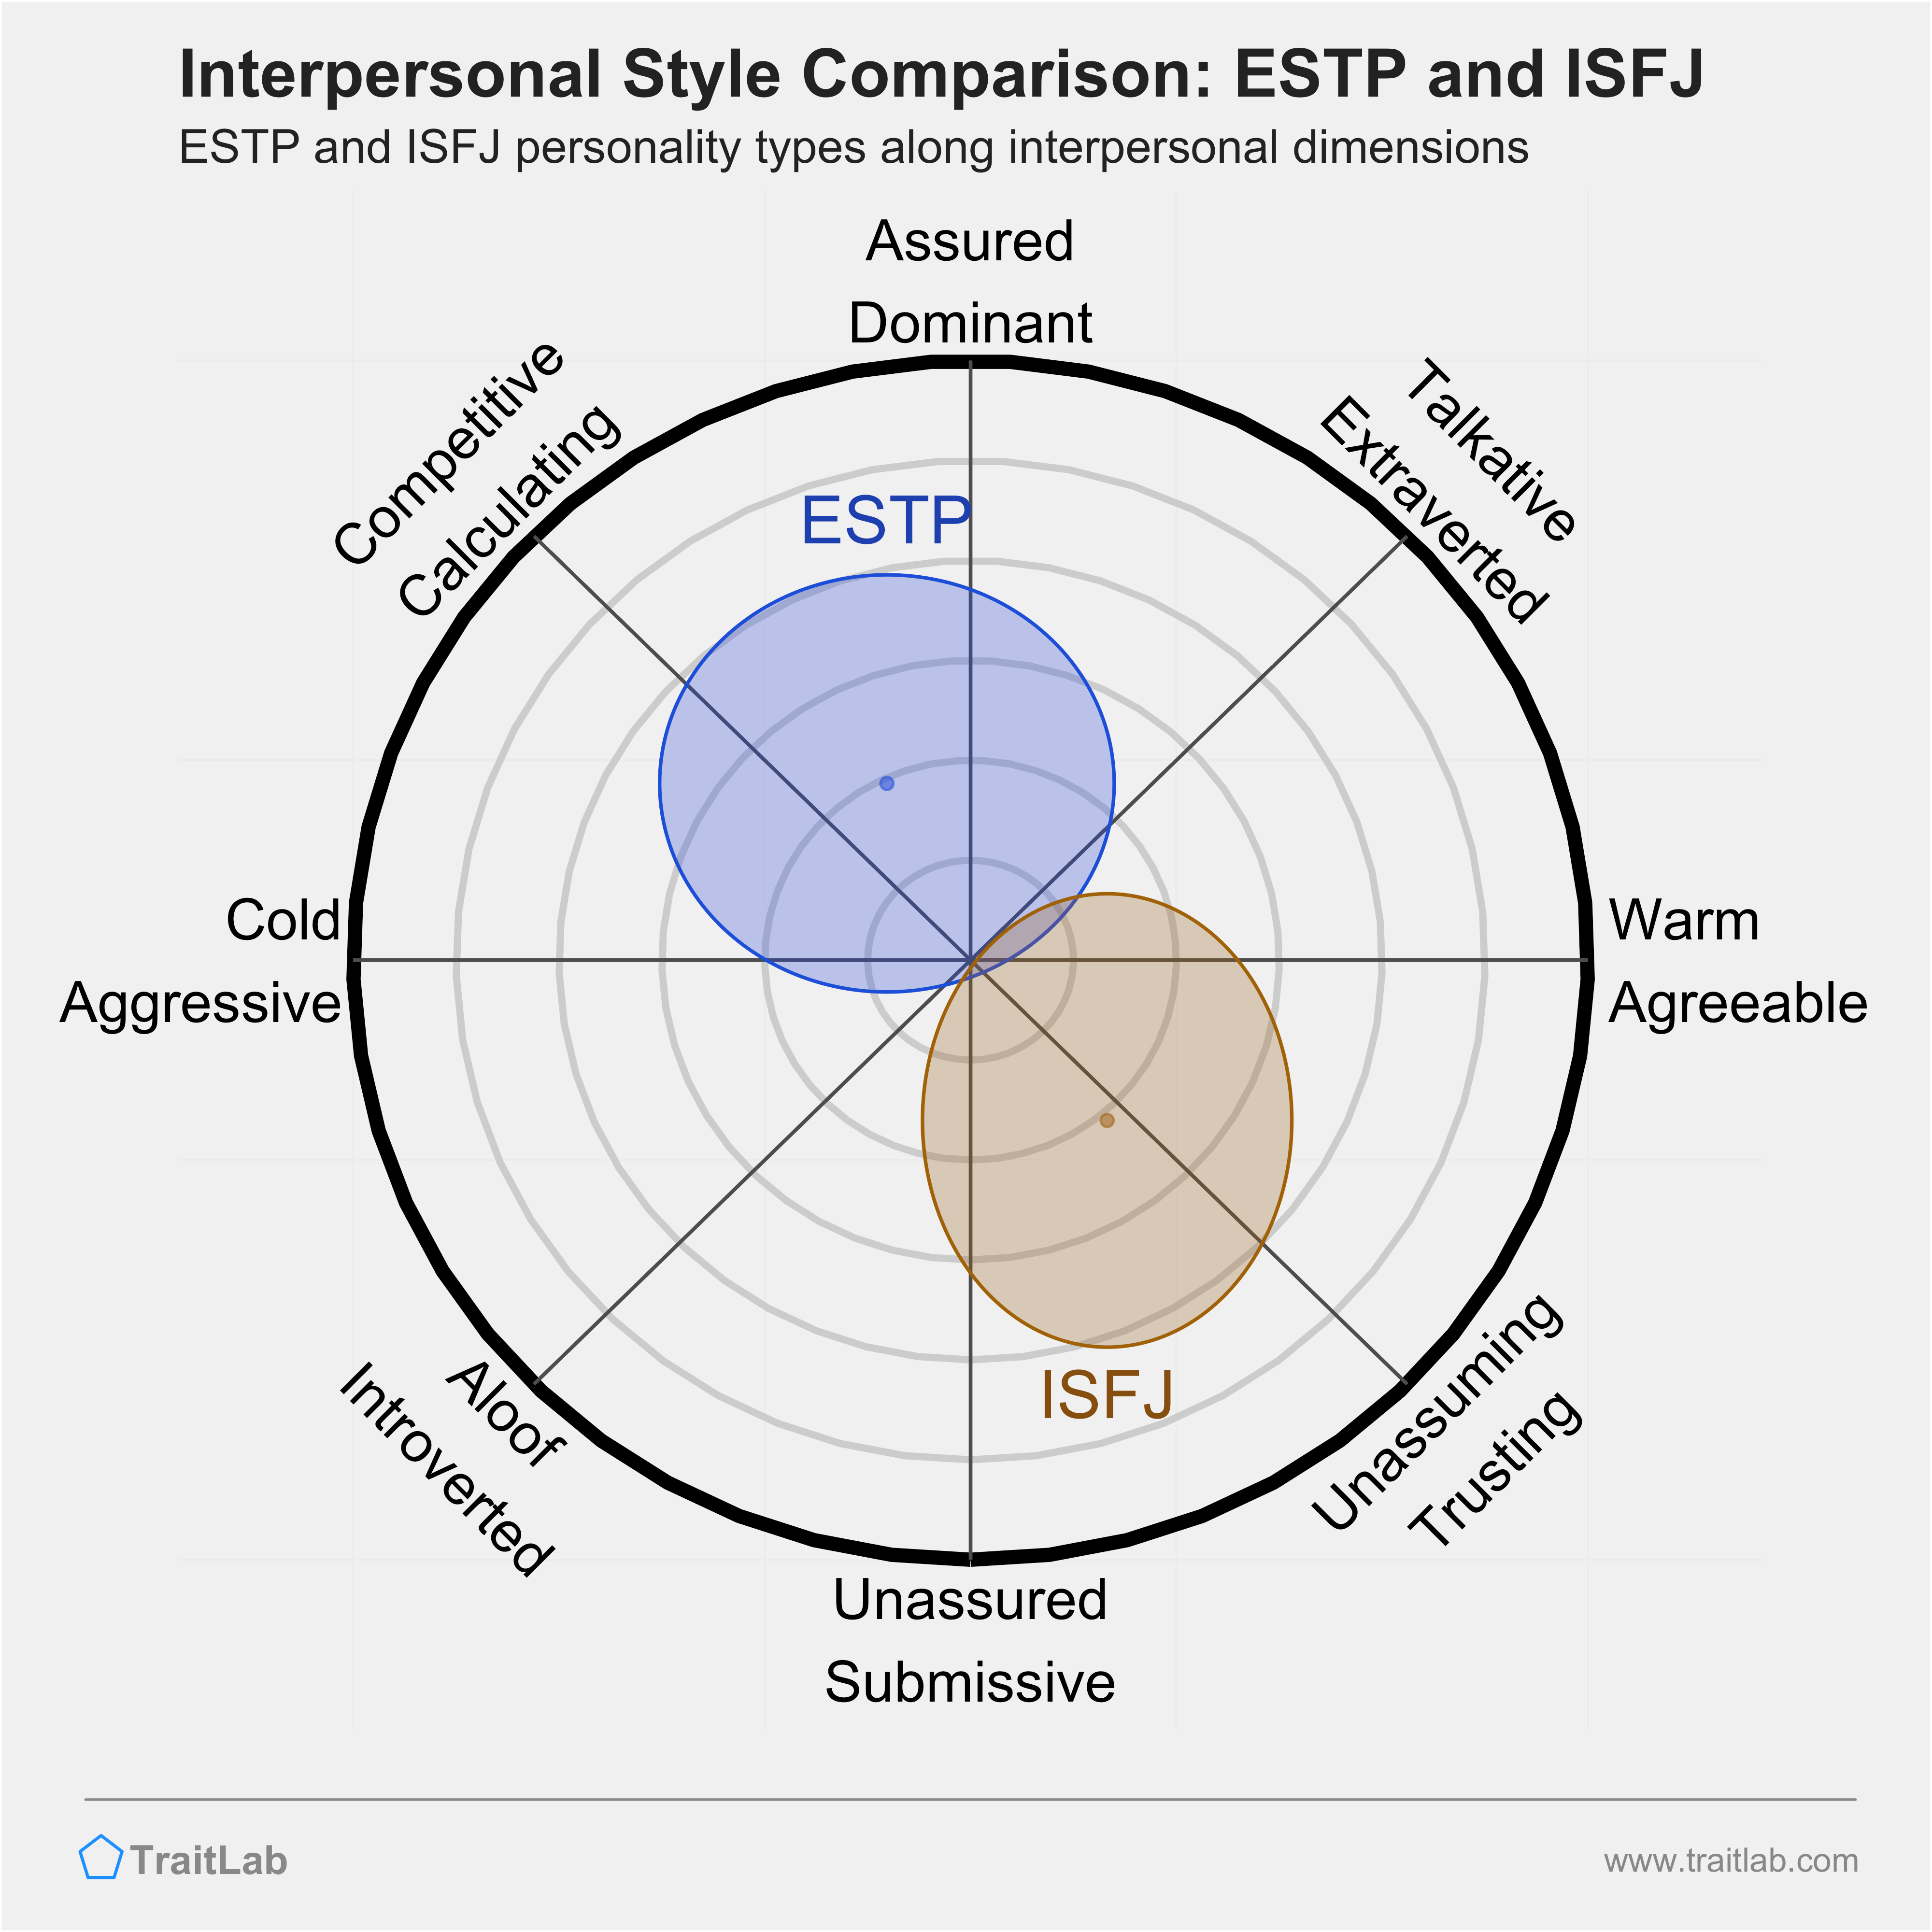 ESTP and ISFJ comparison across interpersonal dimensions